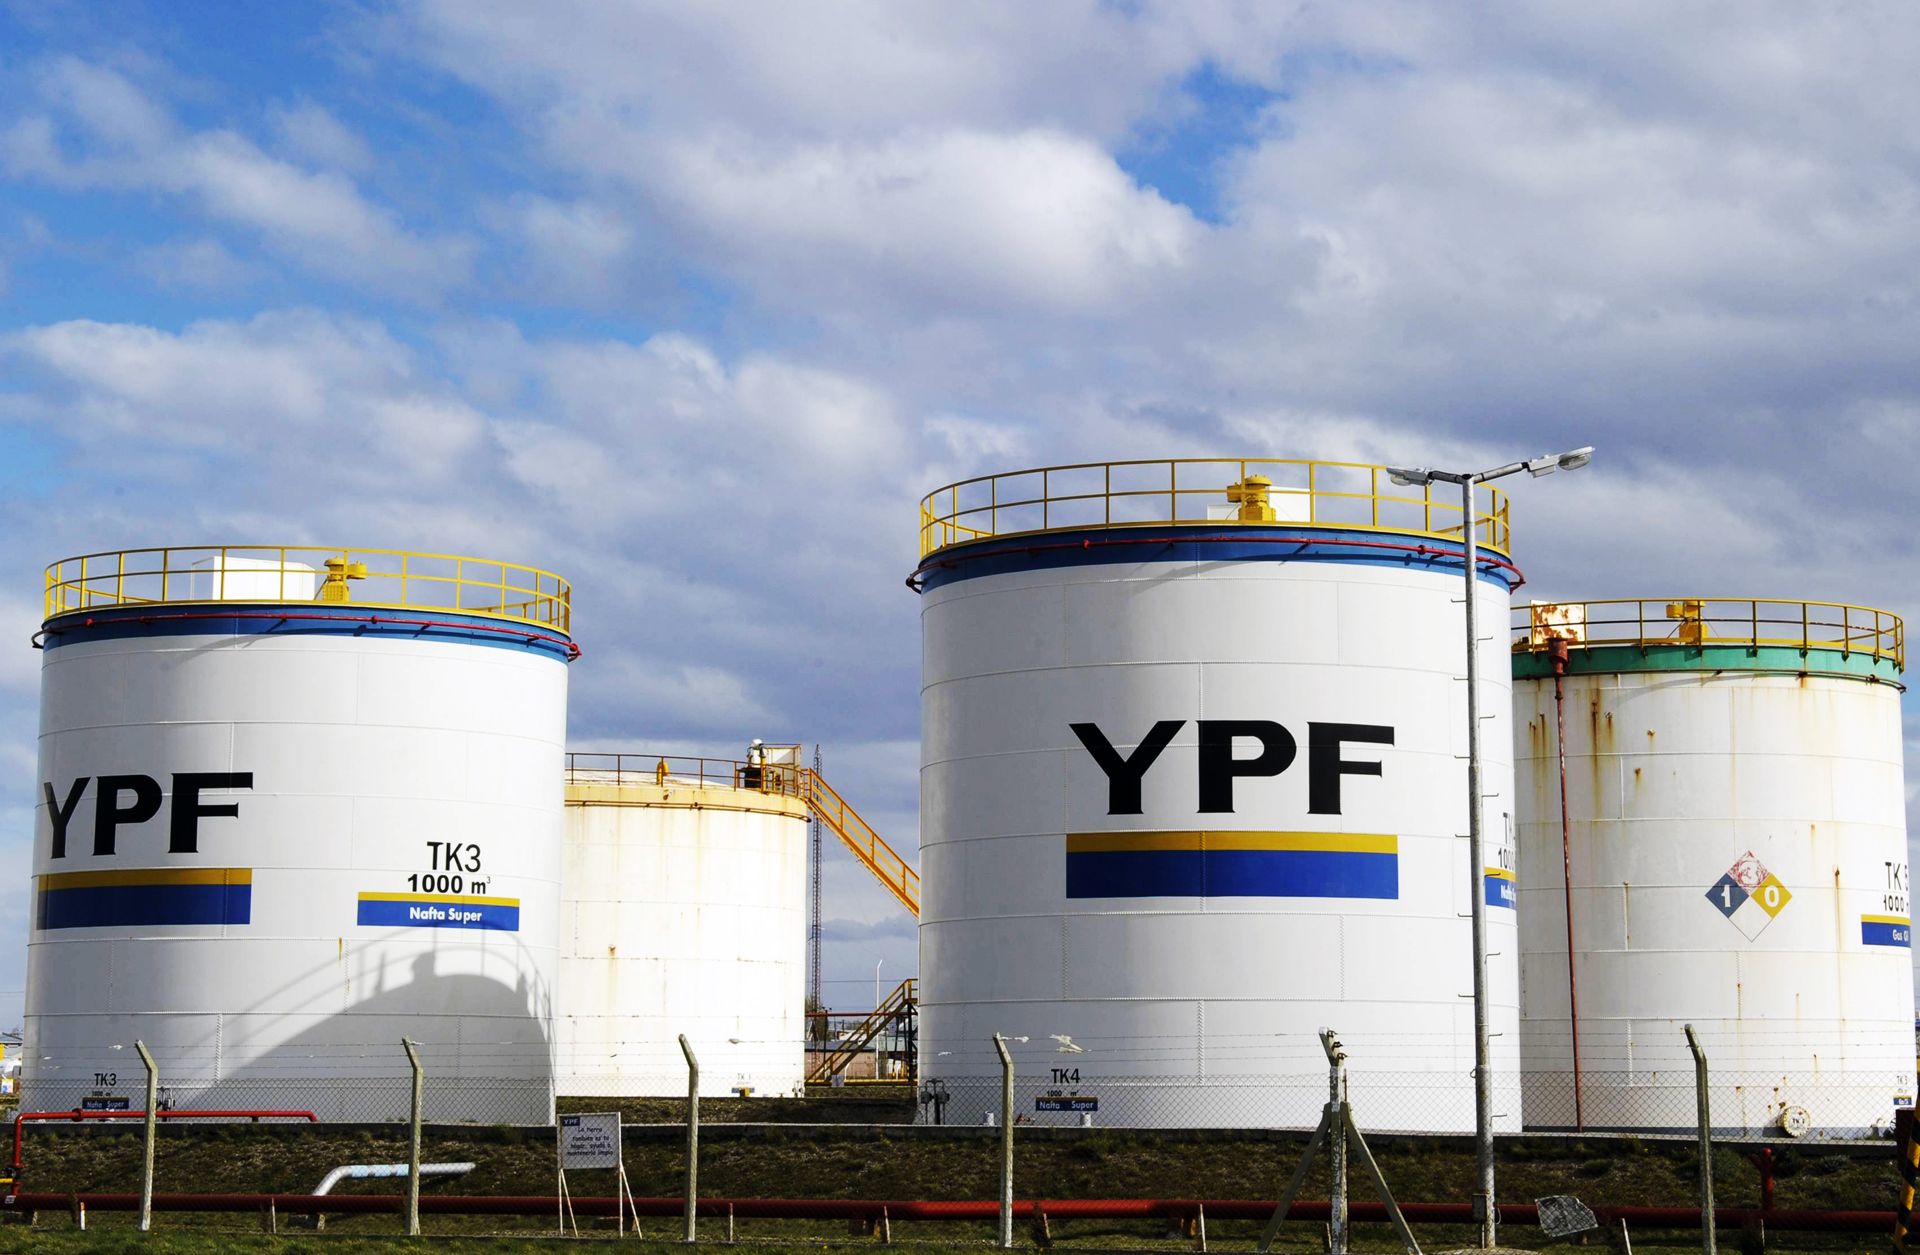 YPF gasoline tanks in Rio Gallegos, Argentina